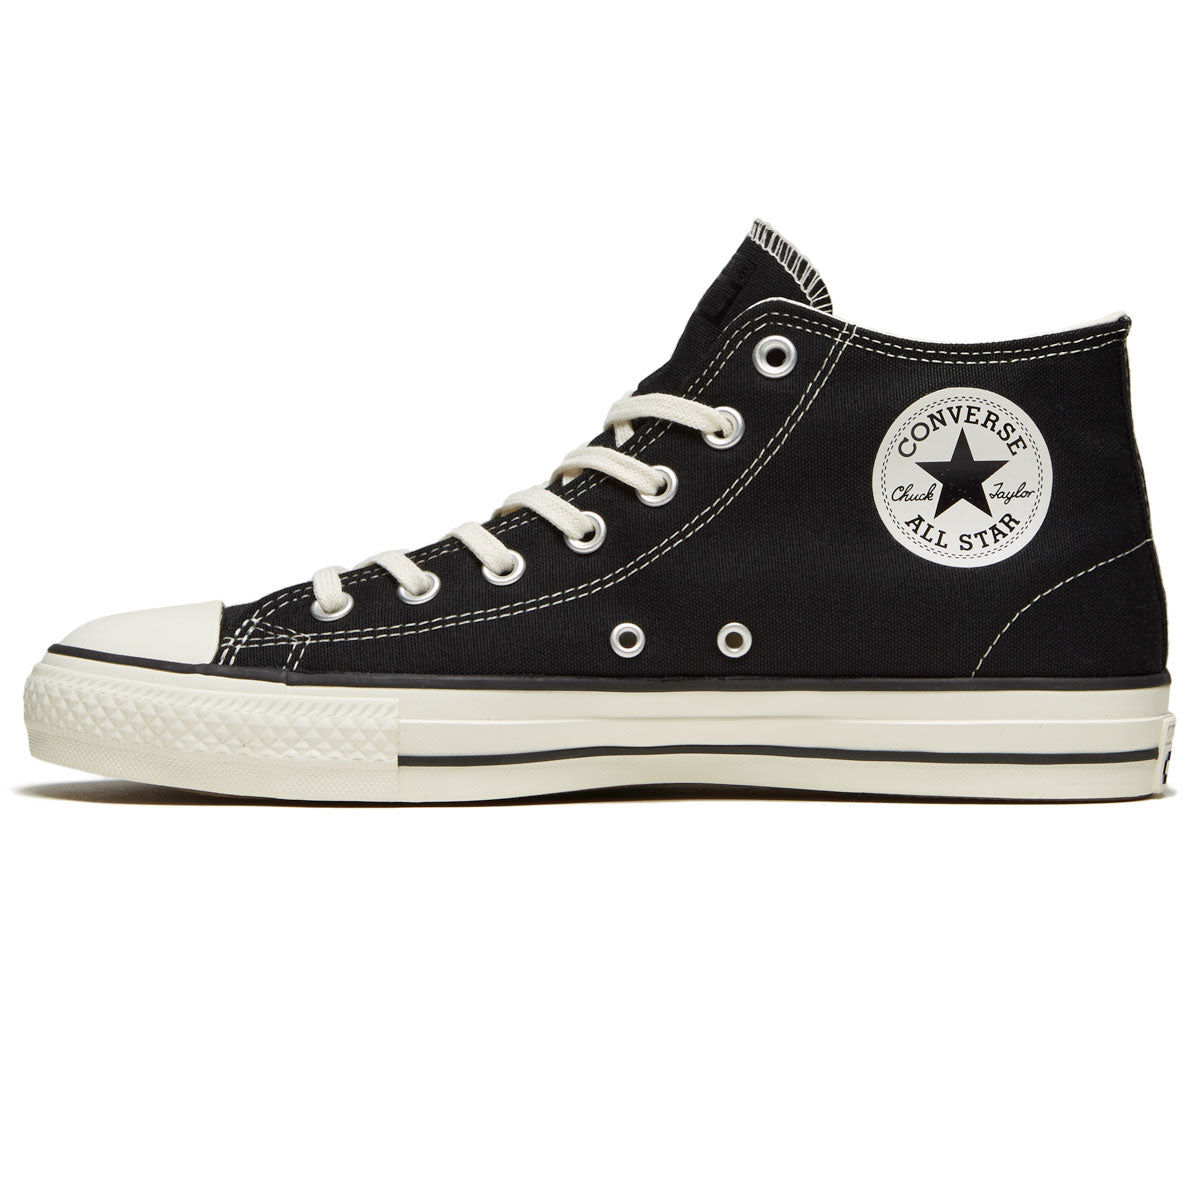 Converse Chuck Taylor All Star Pro Mid Shoes - Black/Black/Egret image 2